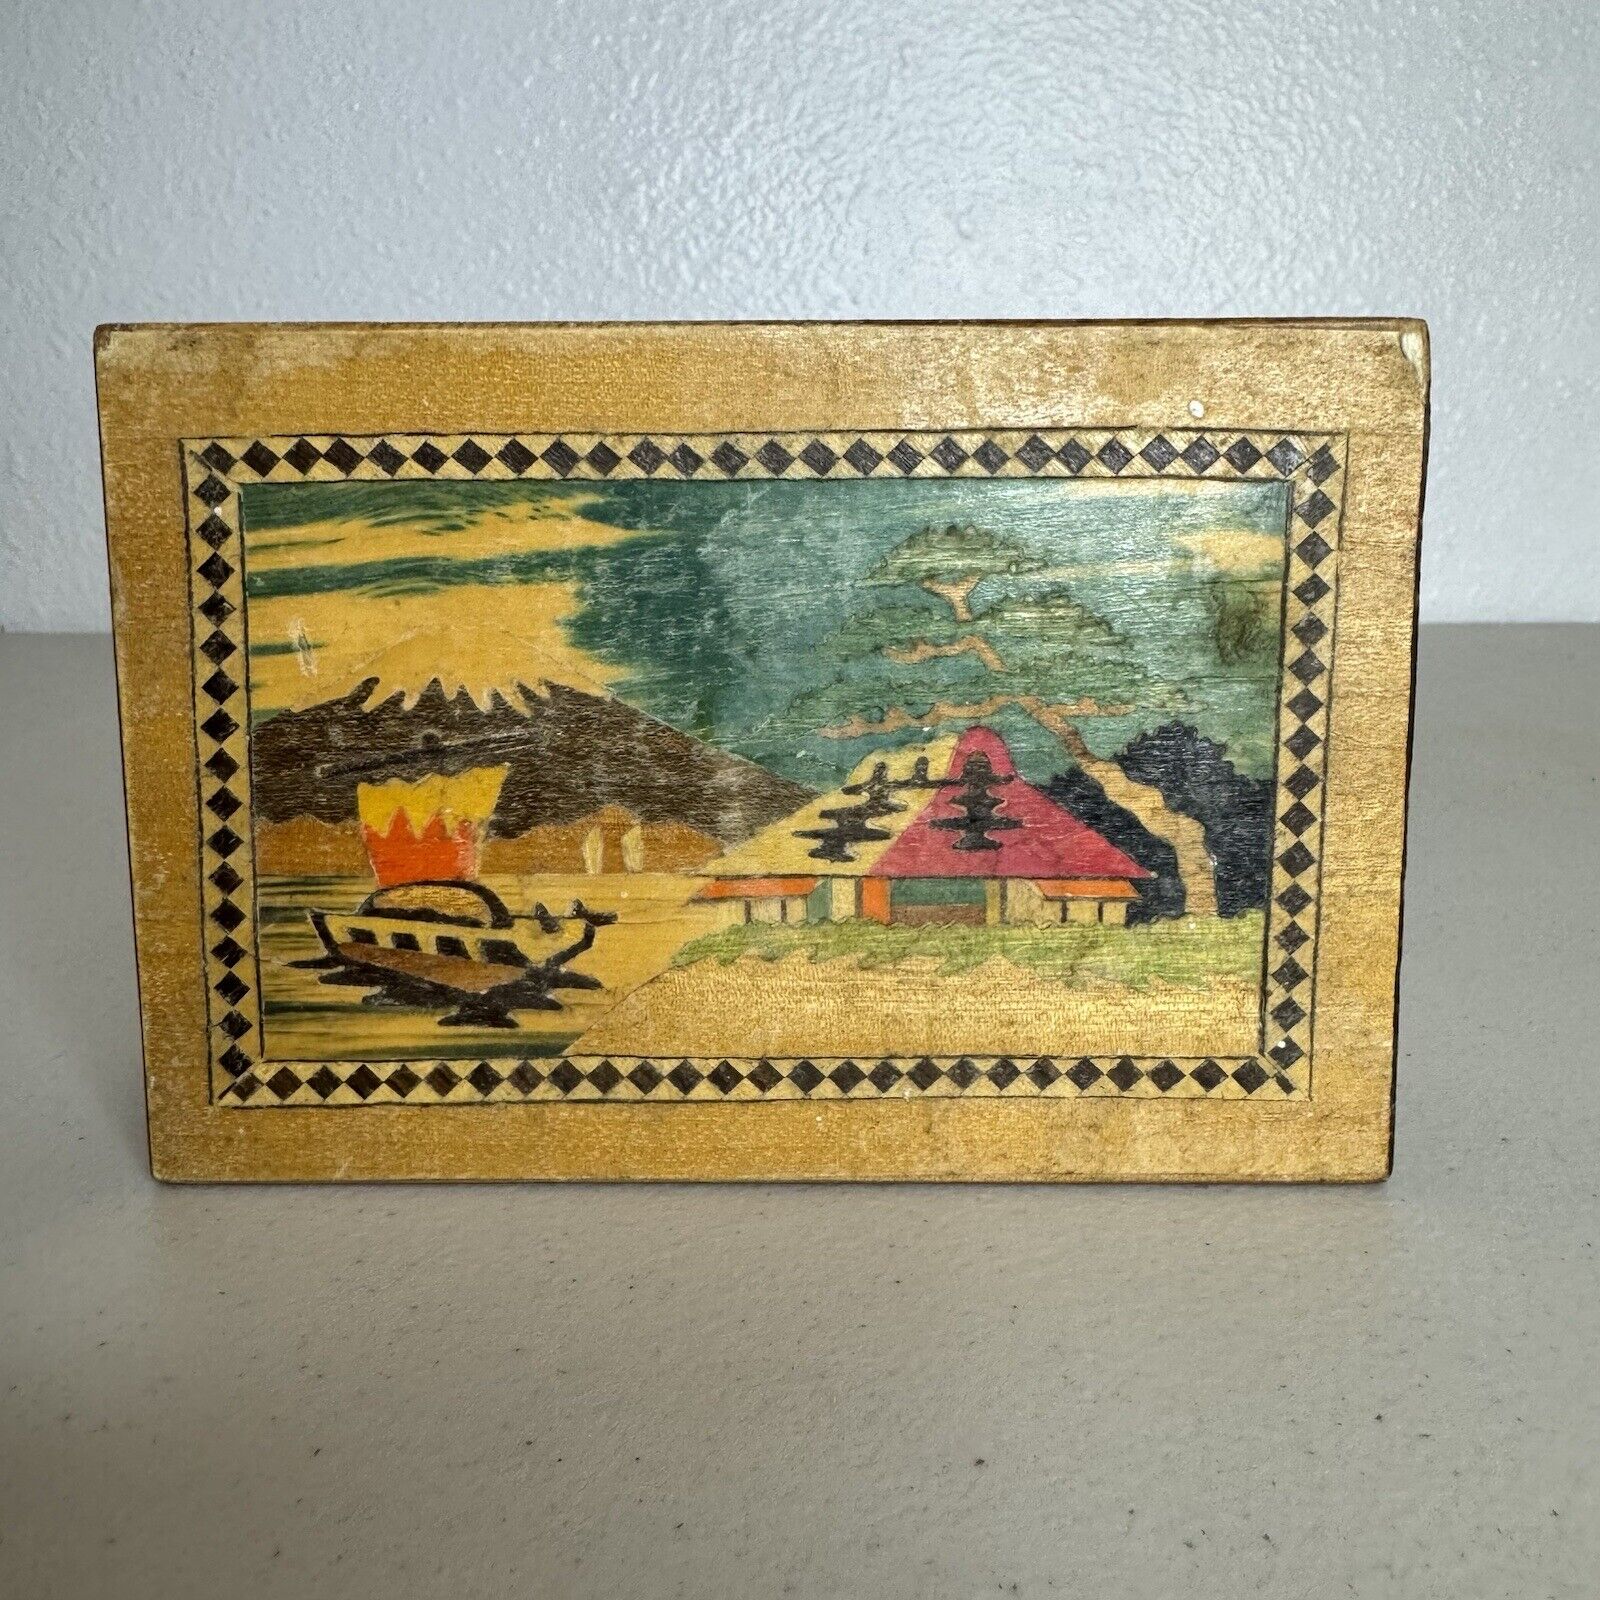 Vintage Japanese Mount Mt Fuji Wooden Puzzle Box Decorative Colorful Wood Print